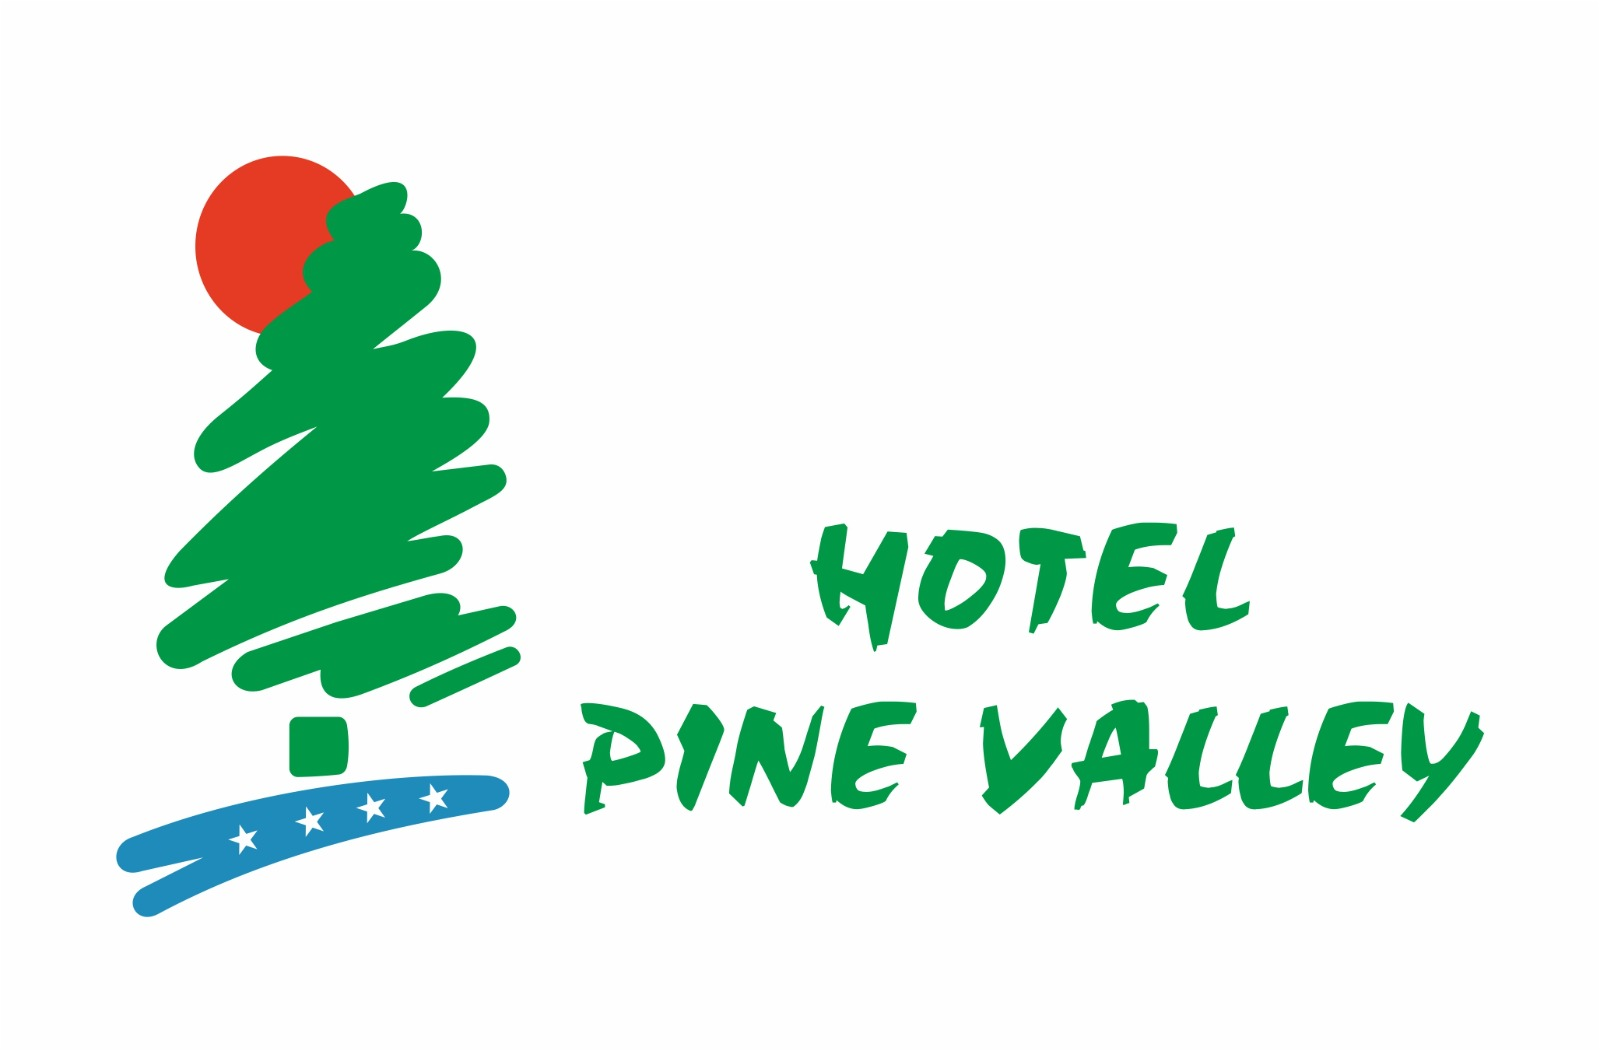 Pine Valley Hotel